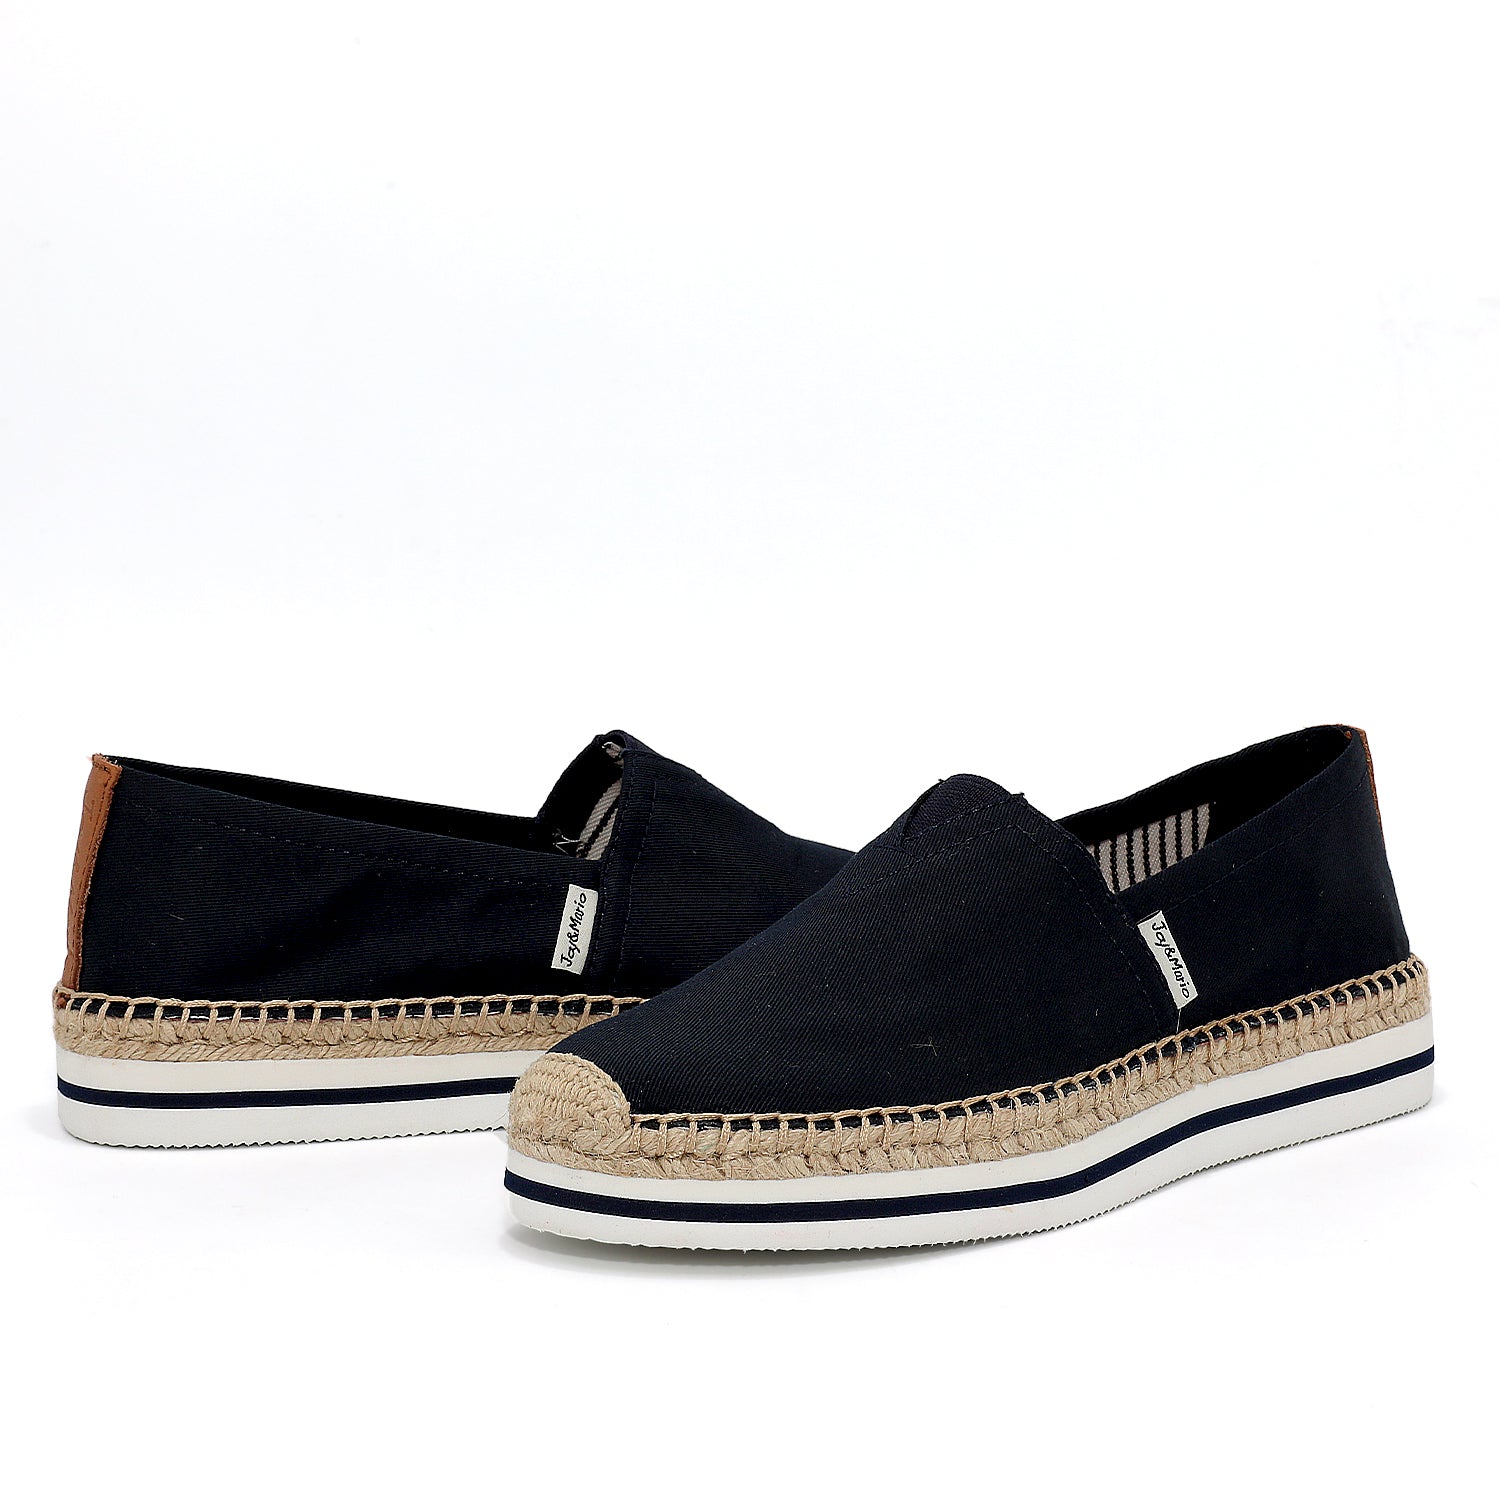 JOY&MARIO HandmadeWomen’s Slip-On Espadrille Fabric Loafers Platform in Navy-A51396W